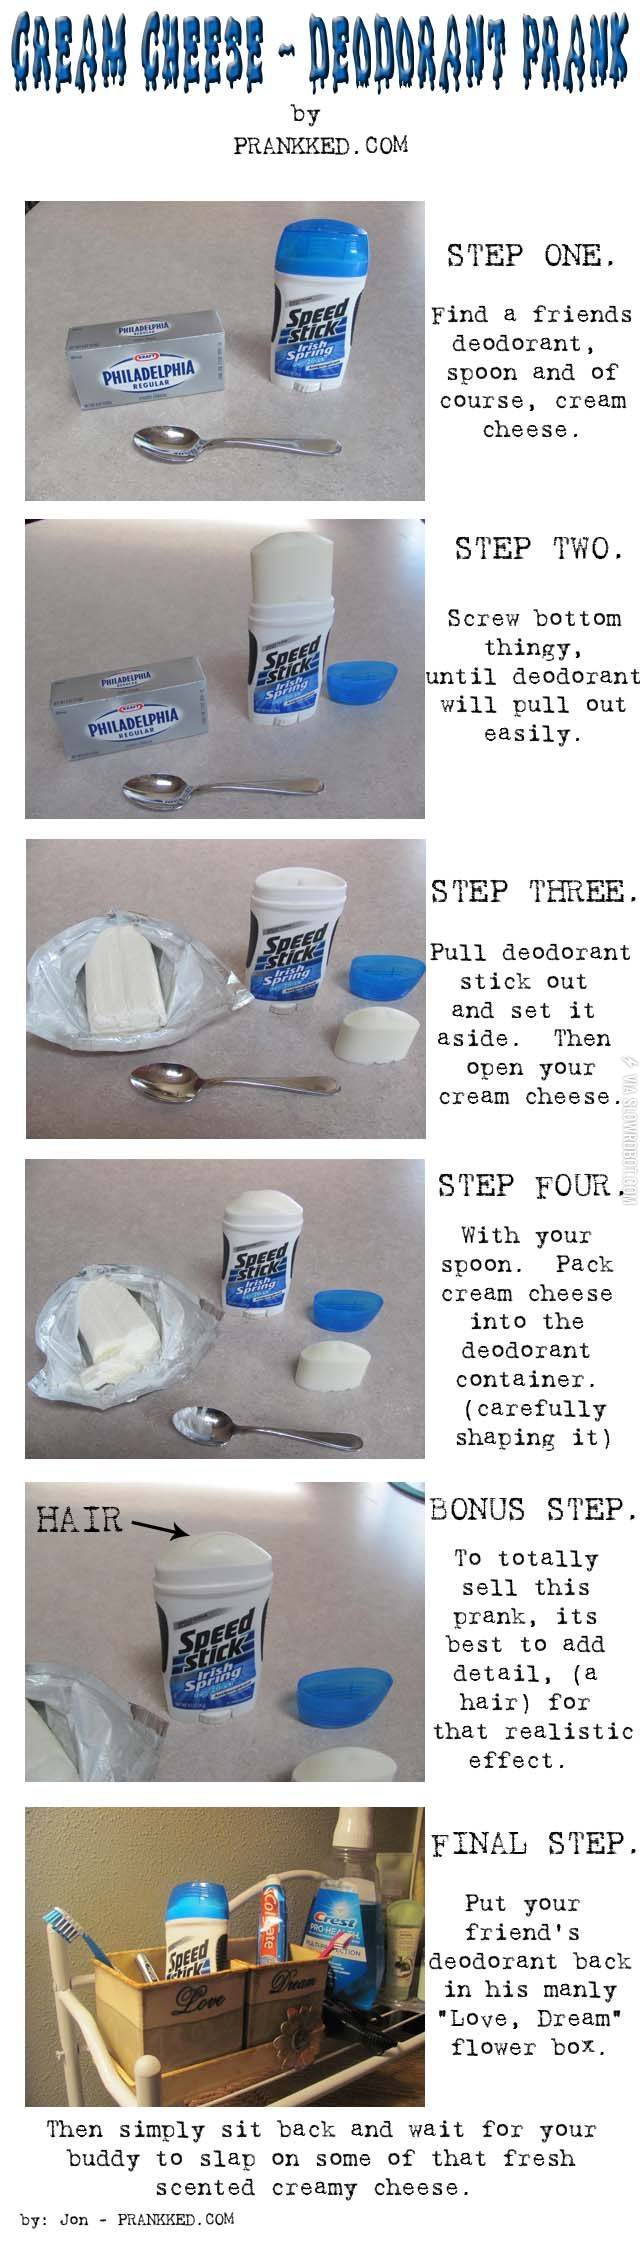 Cream+cheese+deodorant+prank.